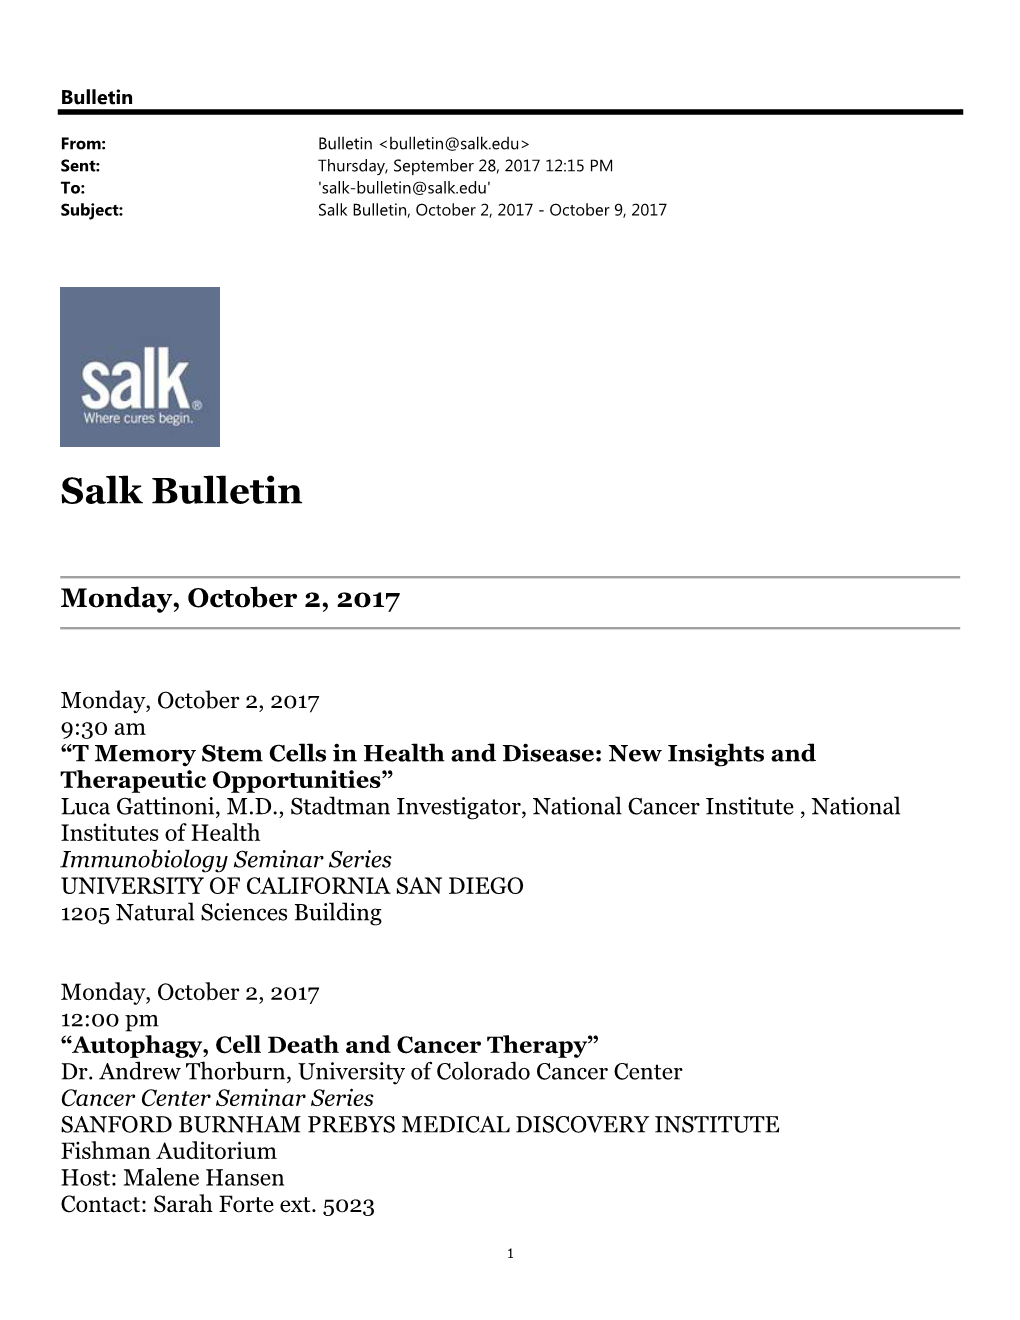 Salk Bulletin Extra